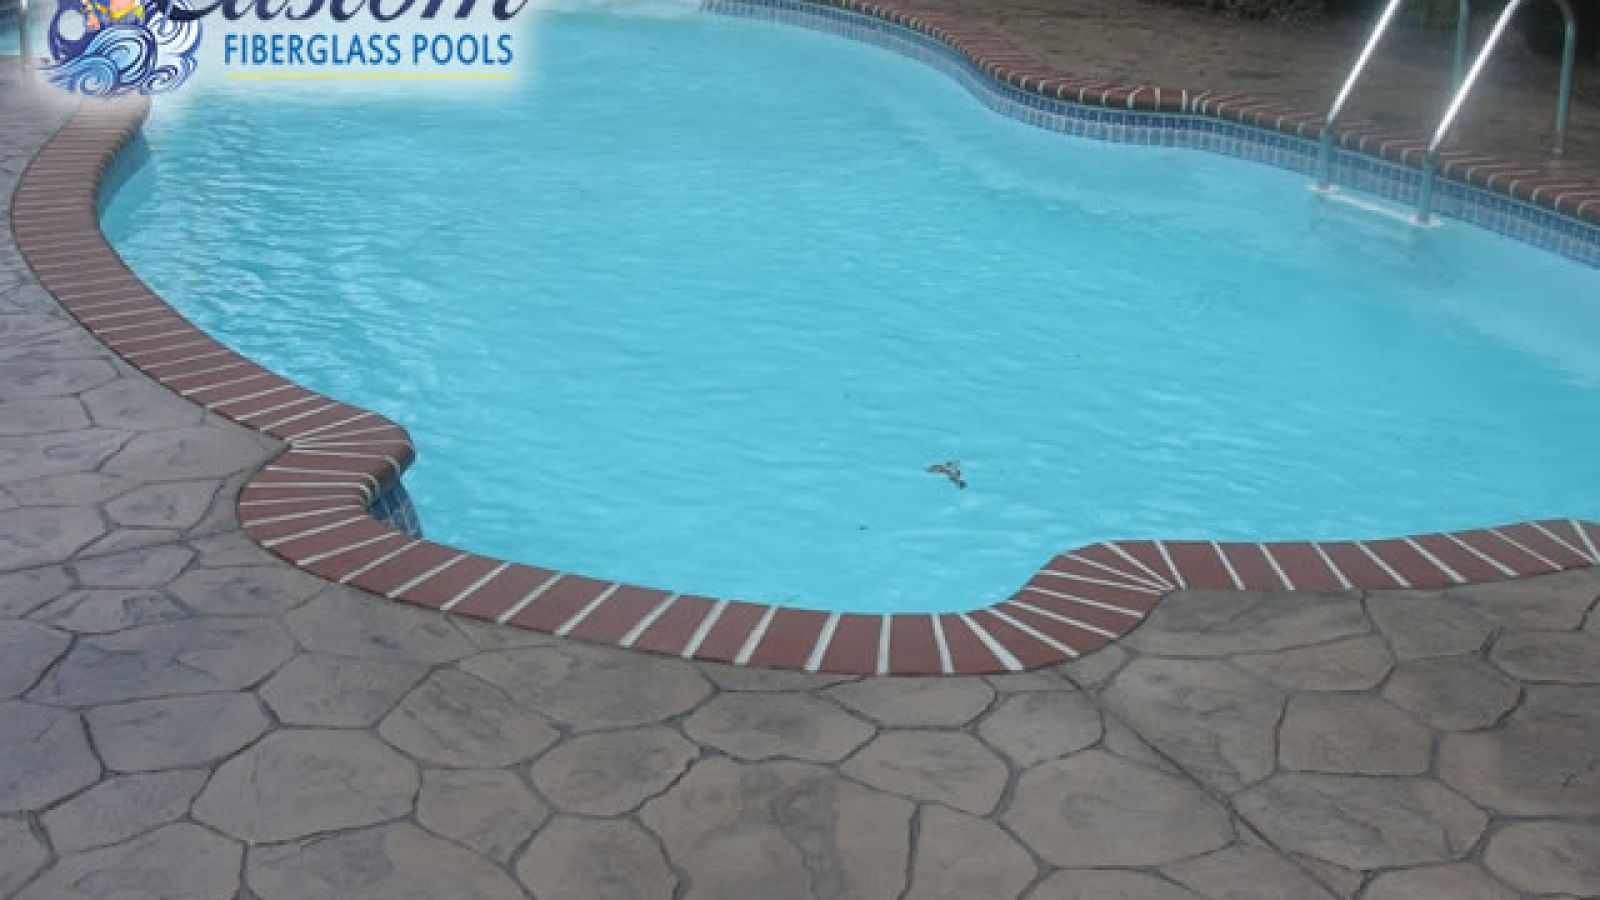 Catalina Freeform Fiberglass Pool, a luxurious and stylish addition to a Clarksville, TN backyard